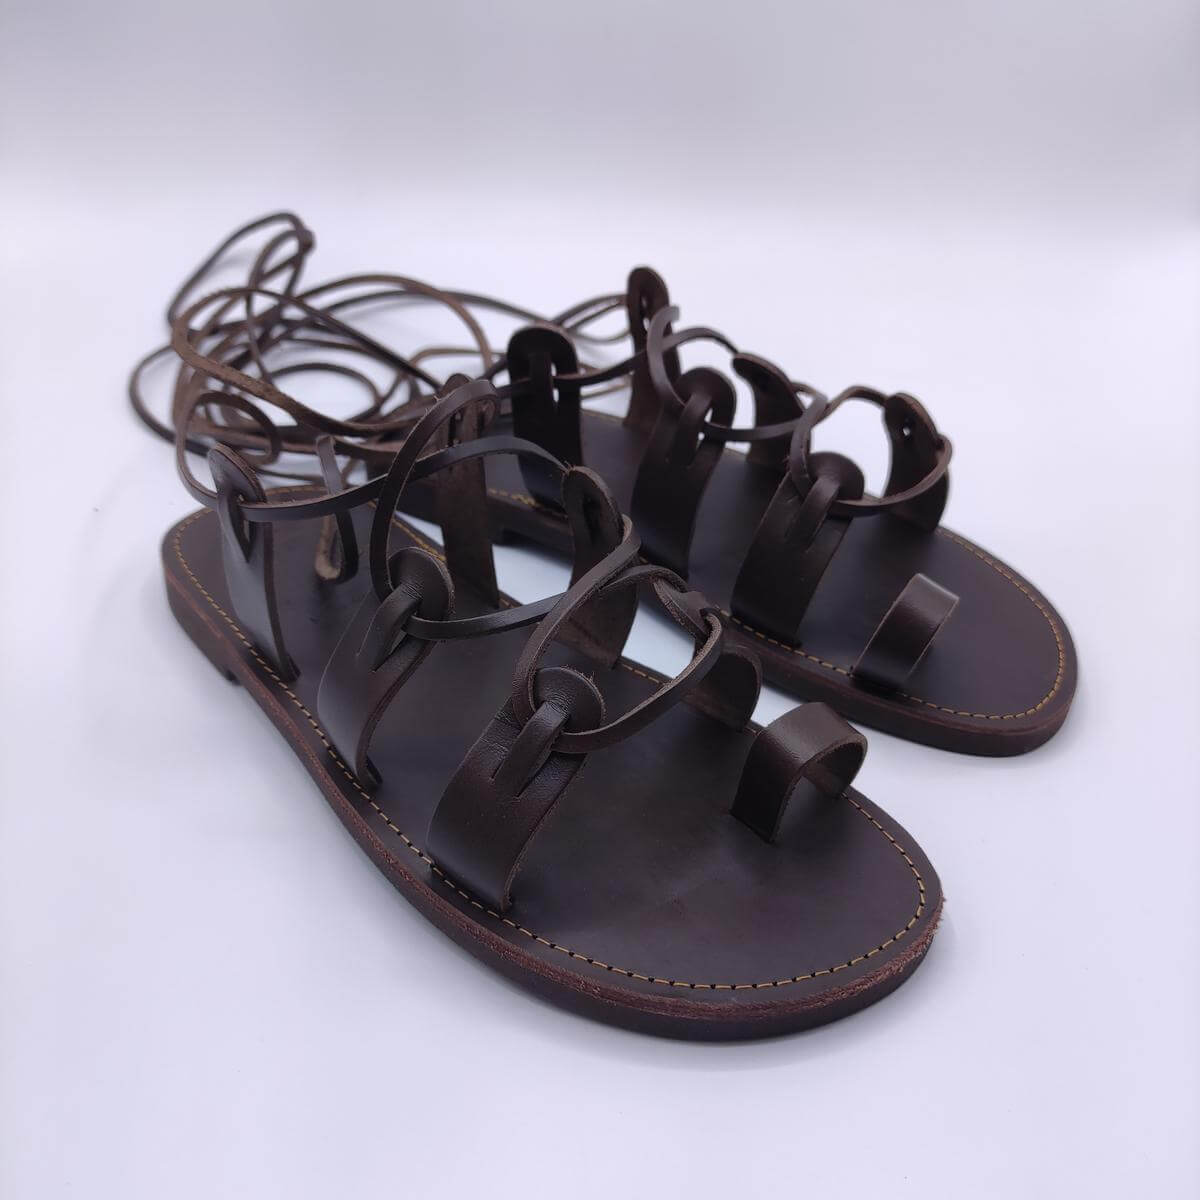 spartan sandals for men lace up brown